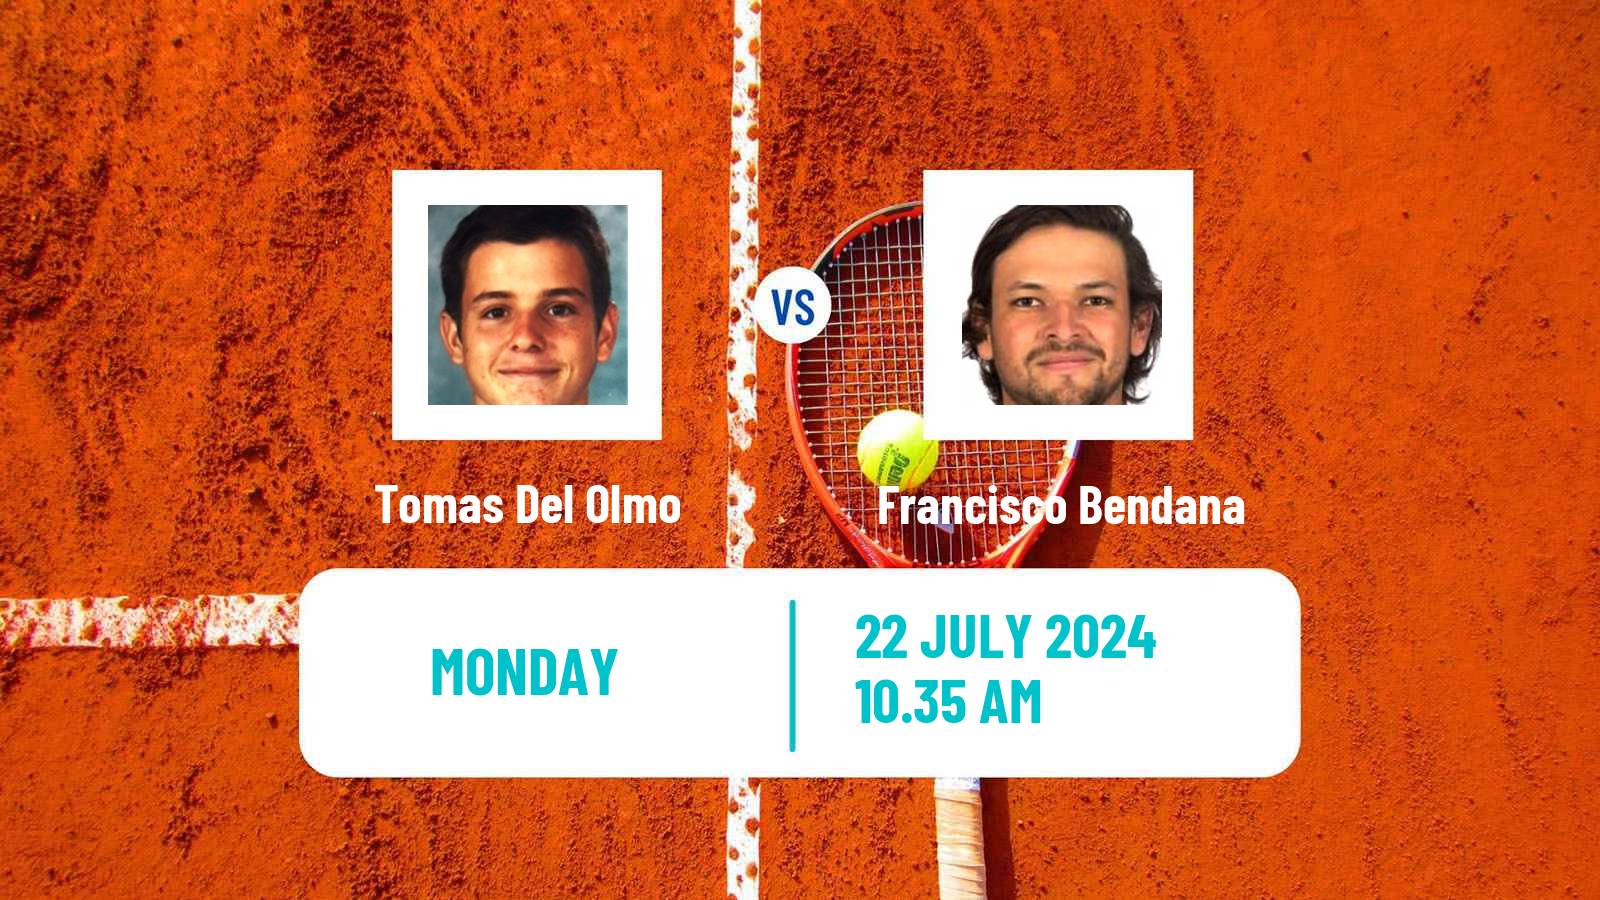 Tennis Davis Cup Group IV Tomas Del Olmo - Francisco Bendana